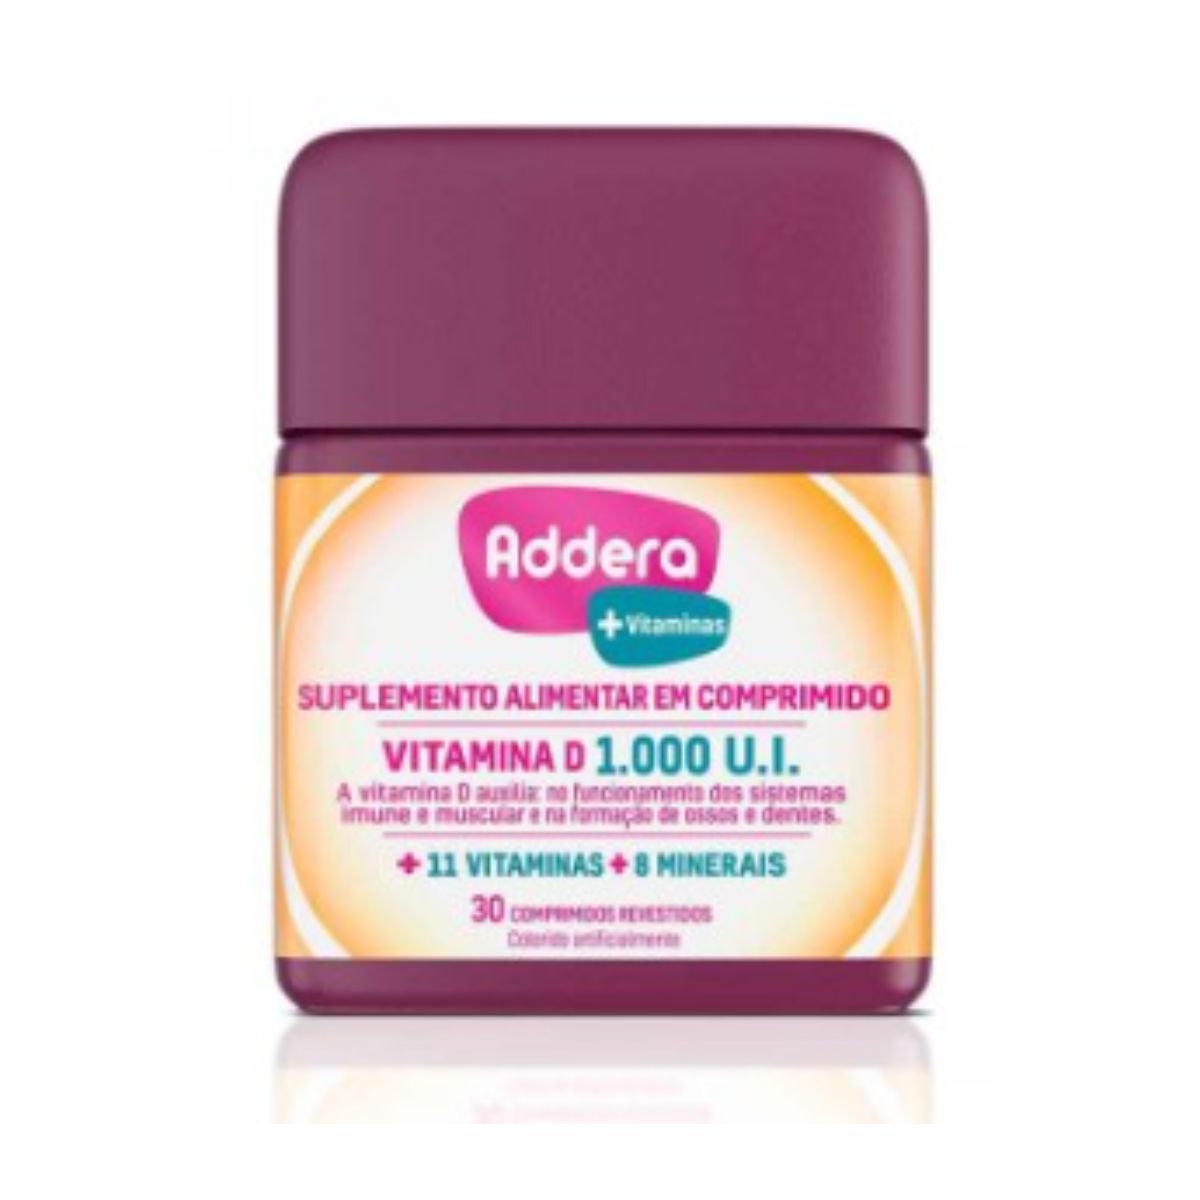 addera-vitaminas-fr-30comp-rev-1.jpg